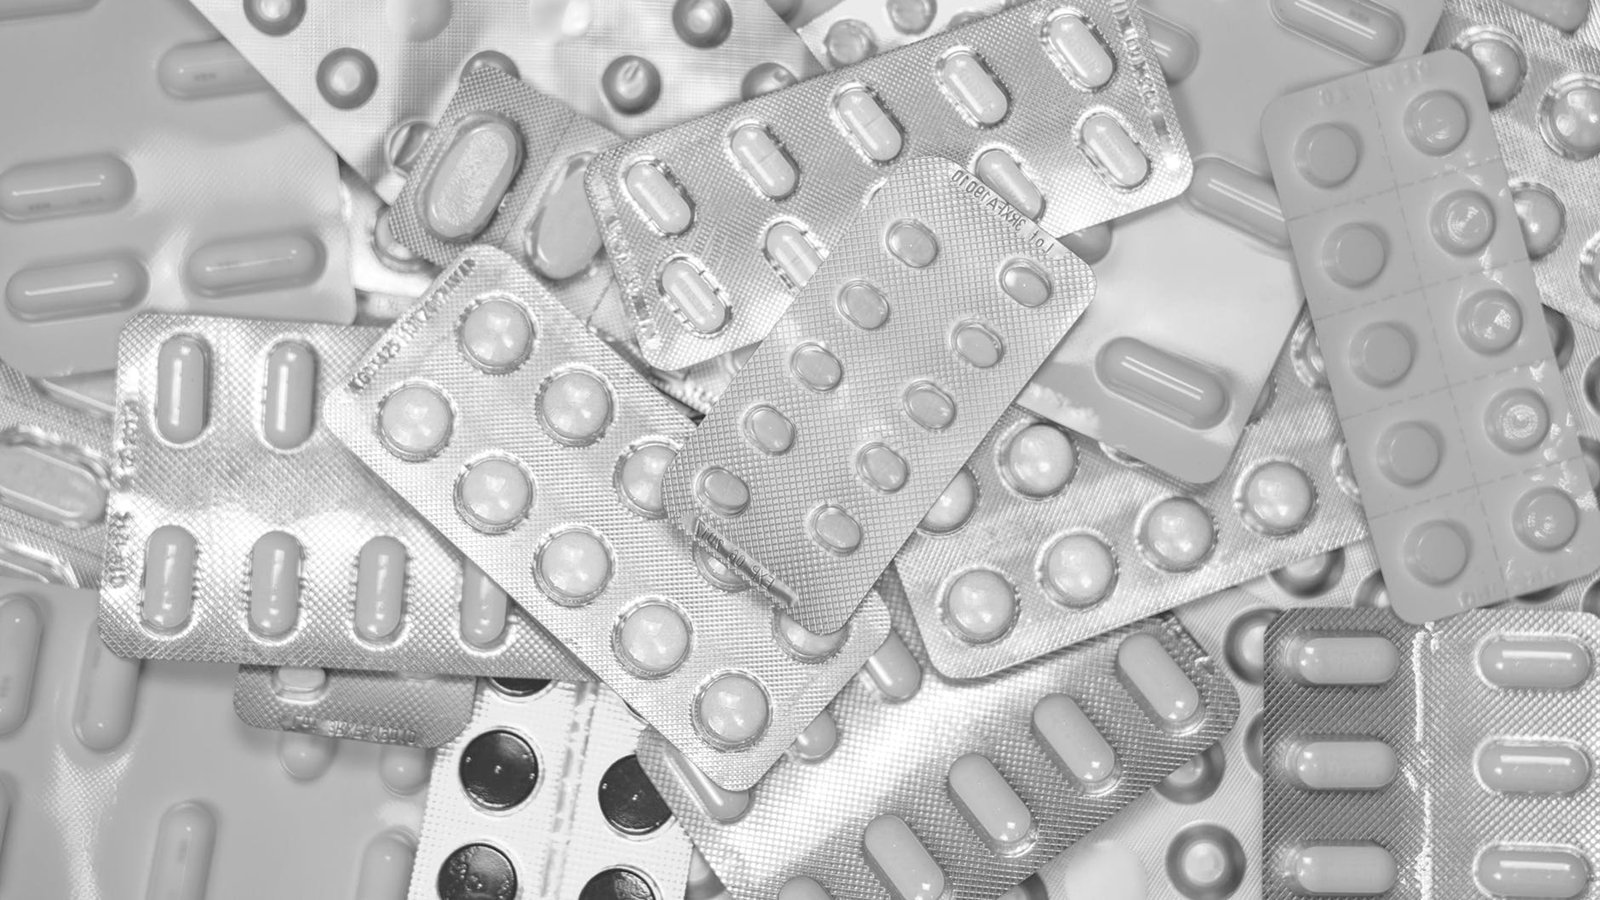 Gobierno de EU ordena a farmacias que ofrecer píldoras abortivas